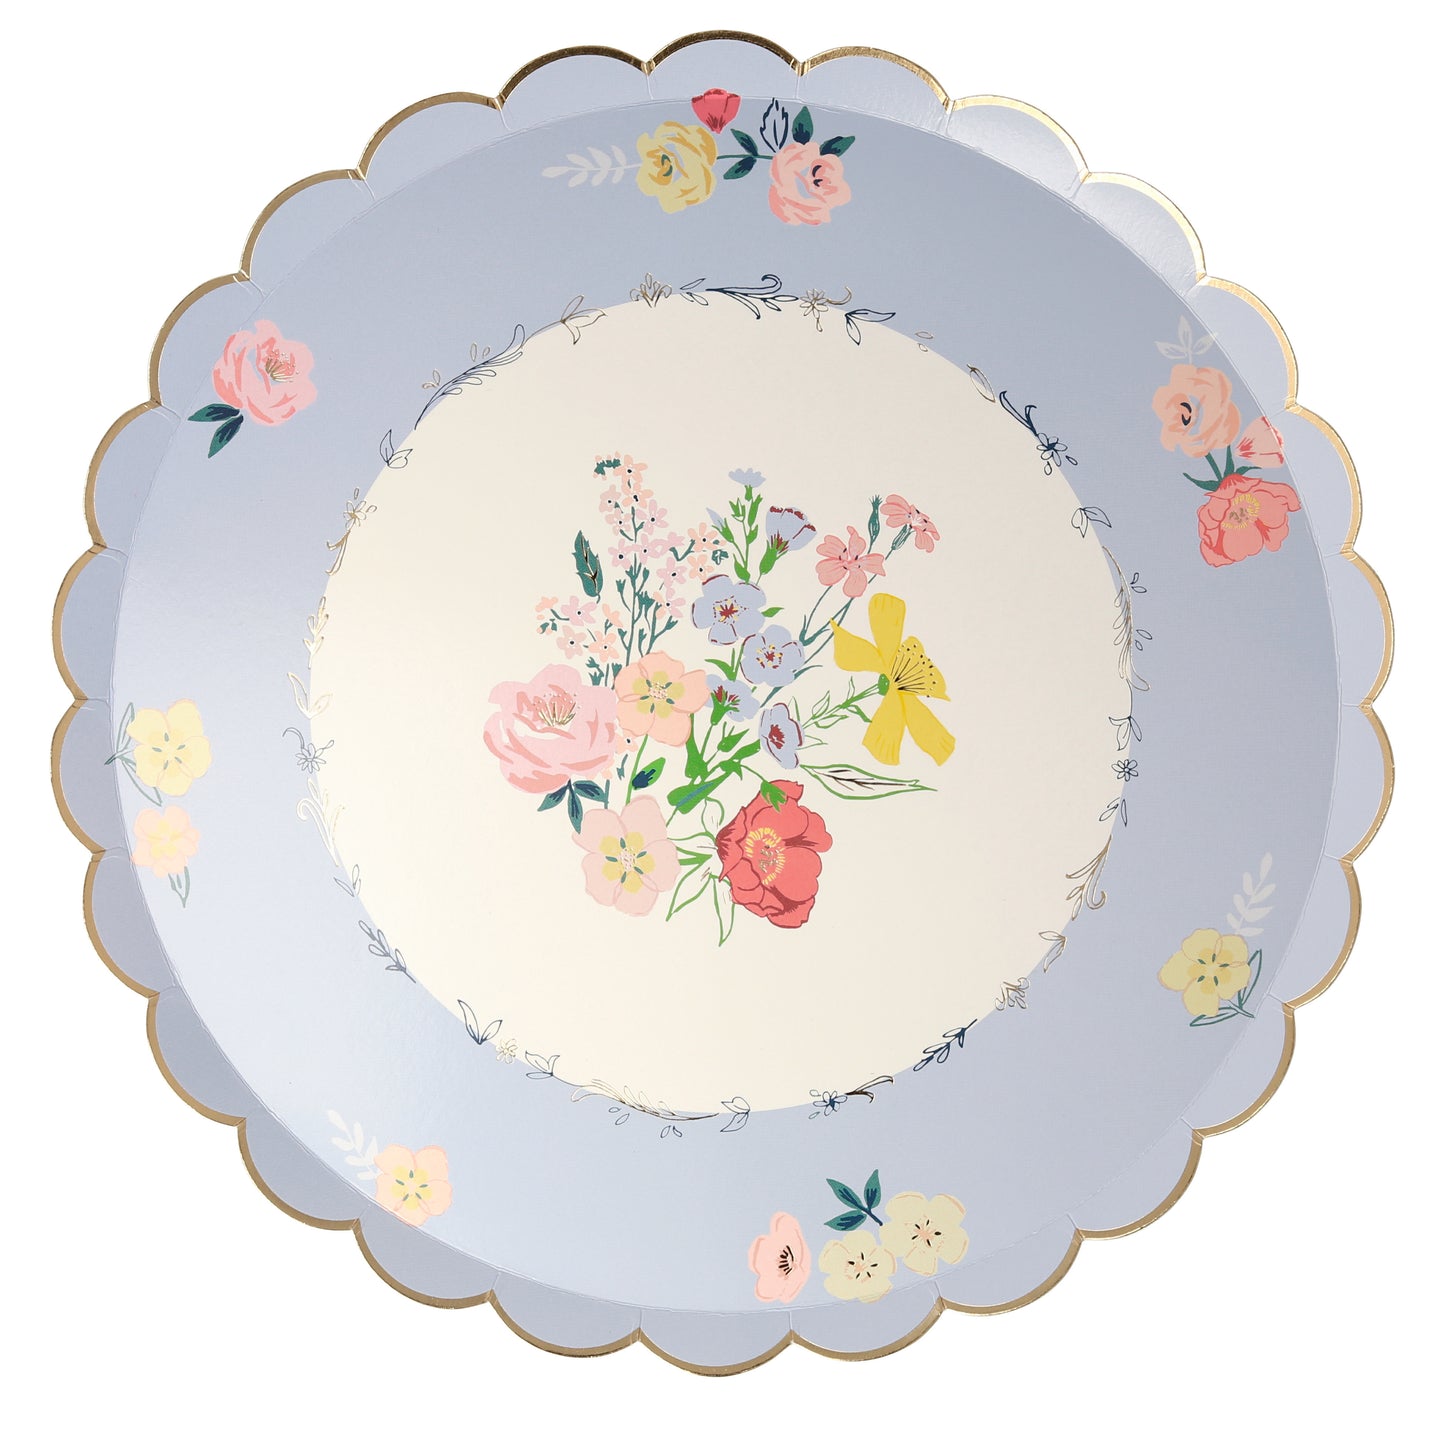 english garden dinner plates by meri meri - pack of 8 in 4 designs 